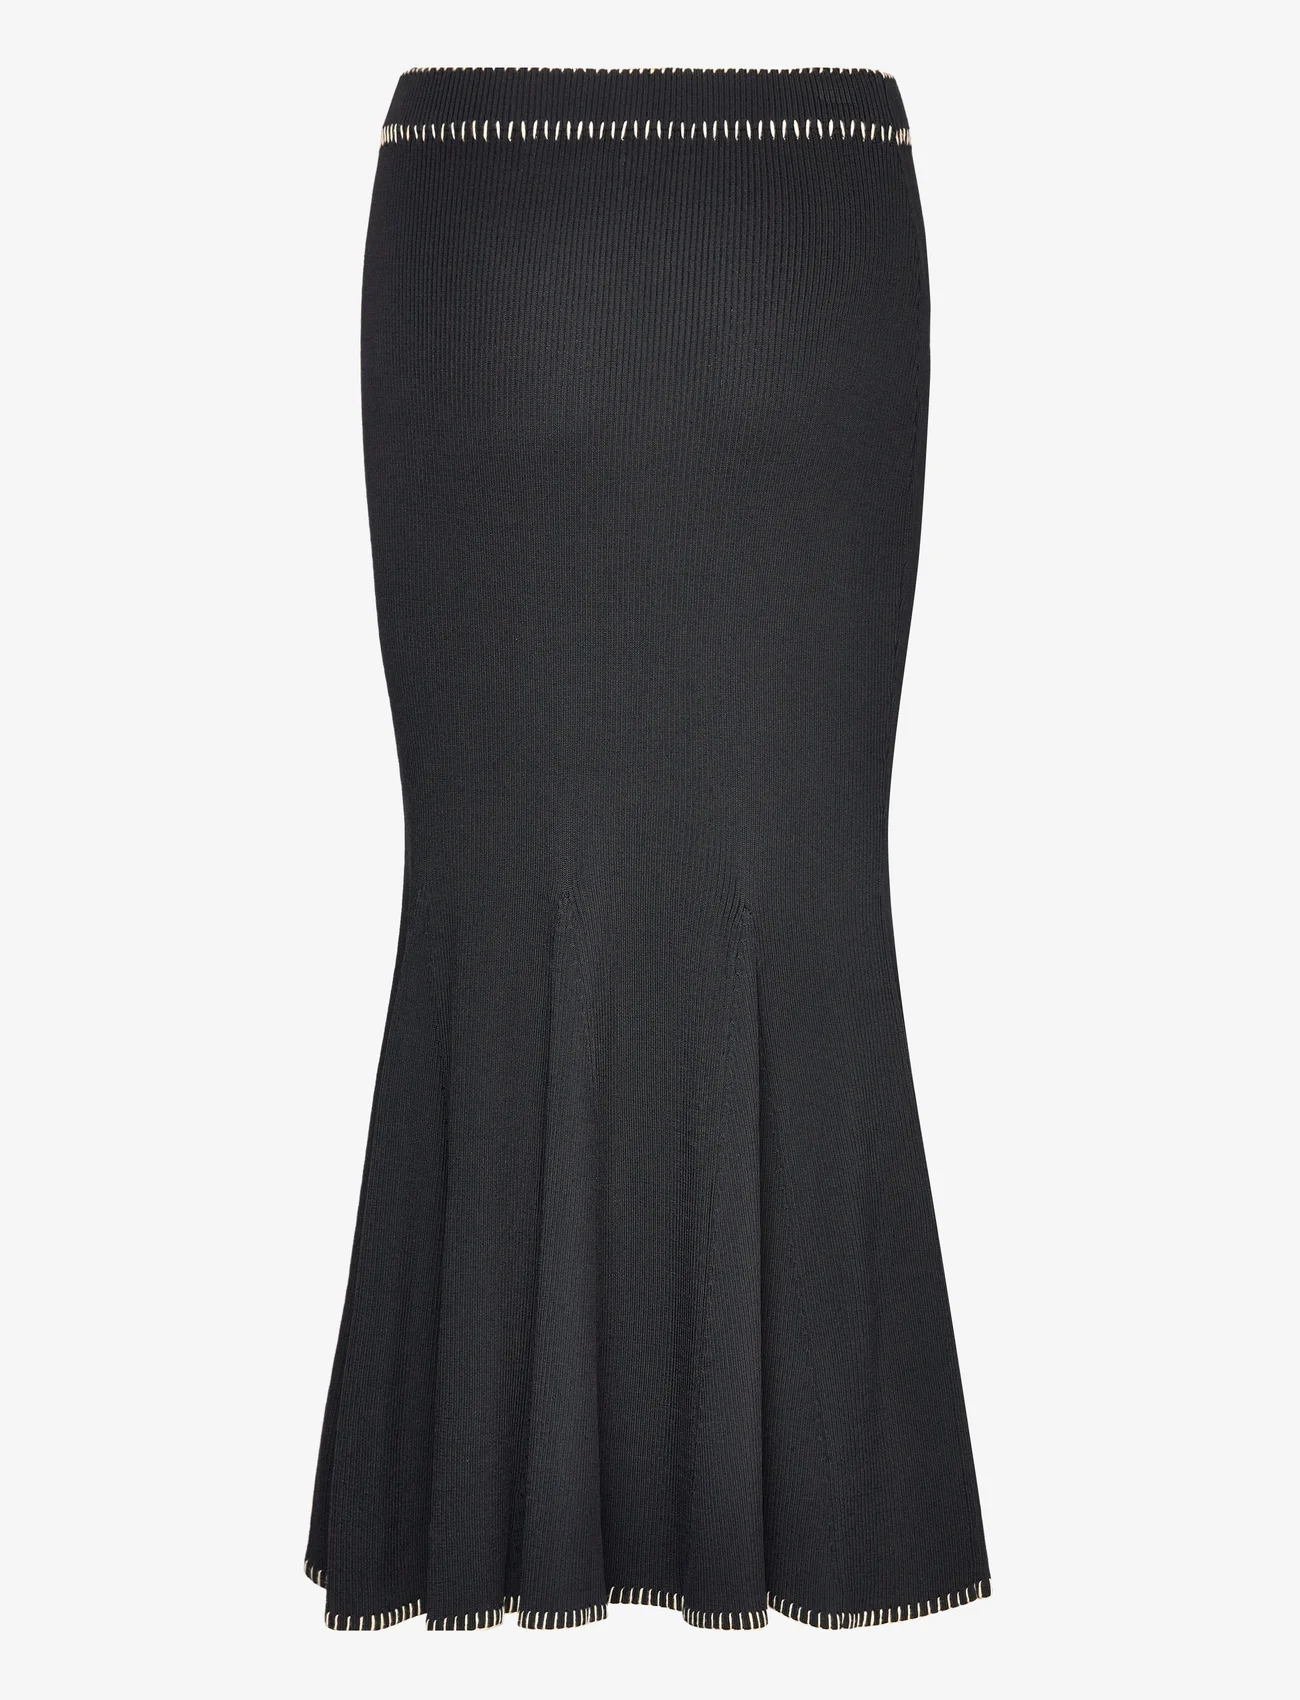 Malina - Faye stitch detail knitted midi skirt - stickade kjolar - black - 1